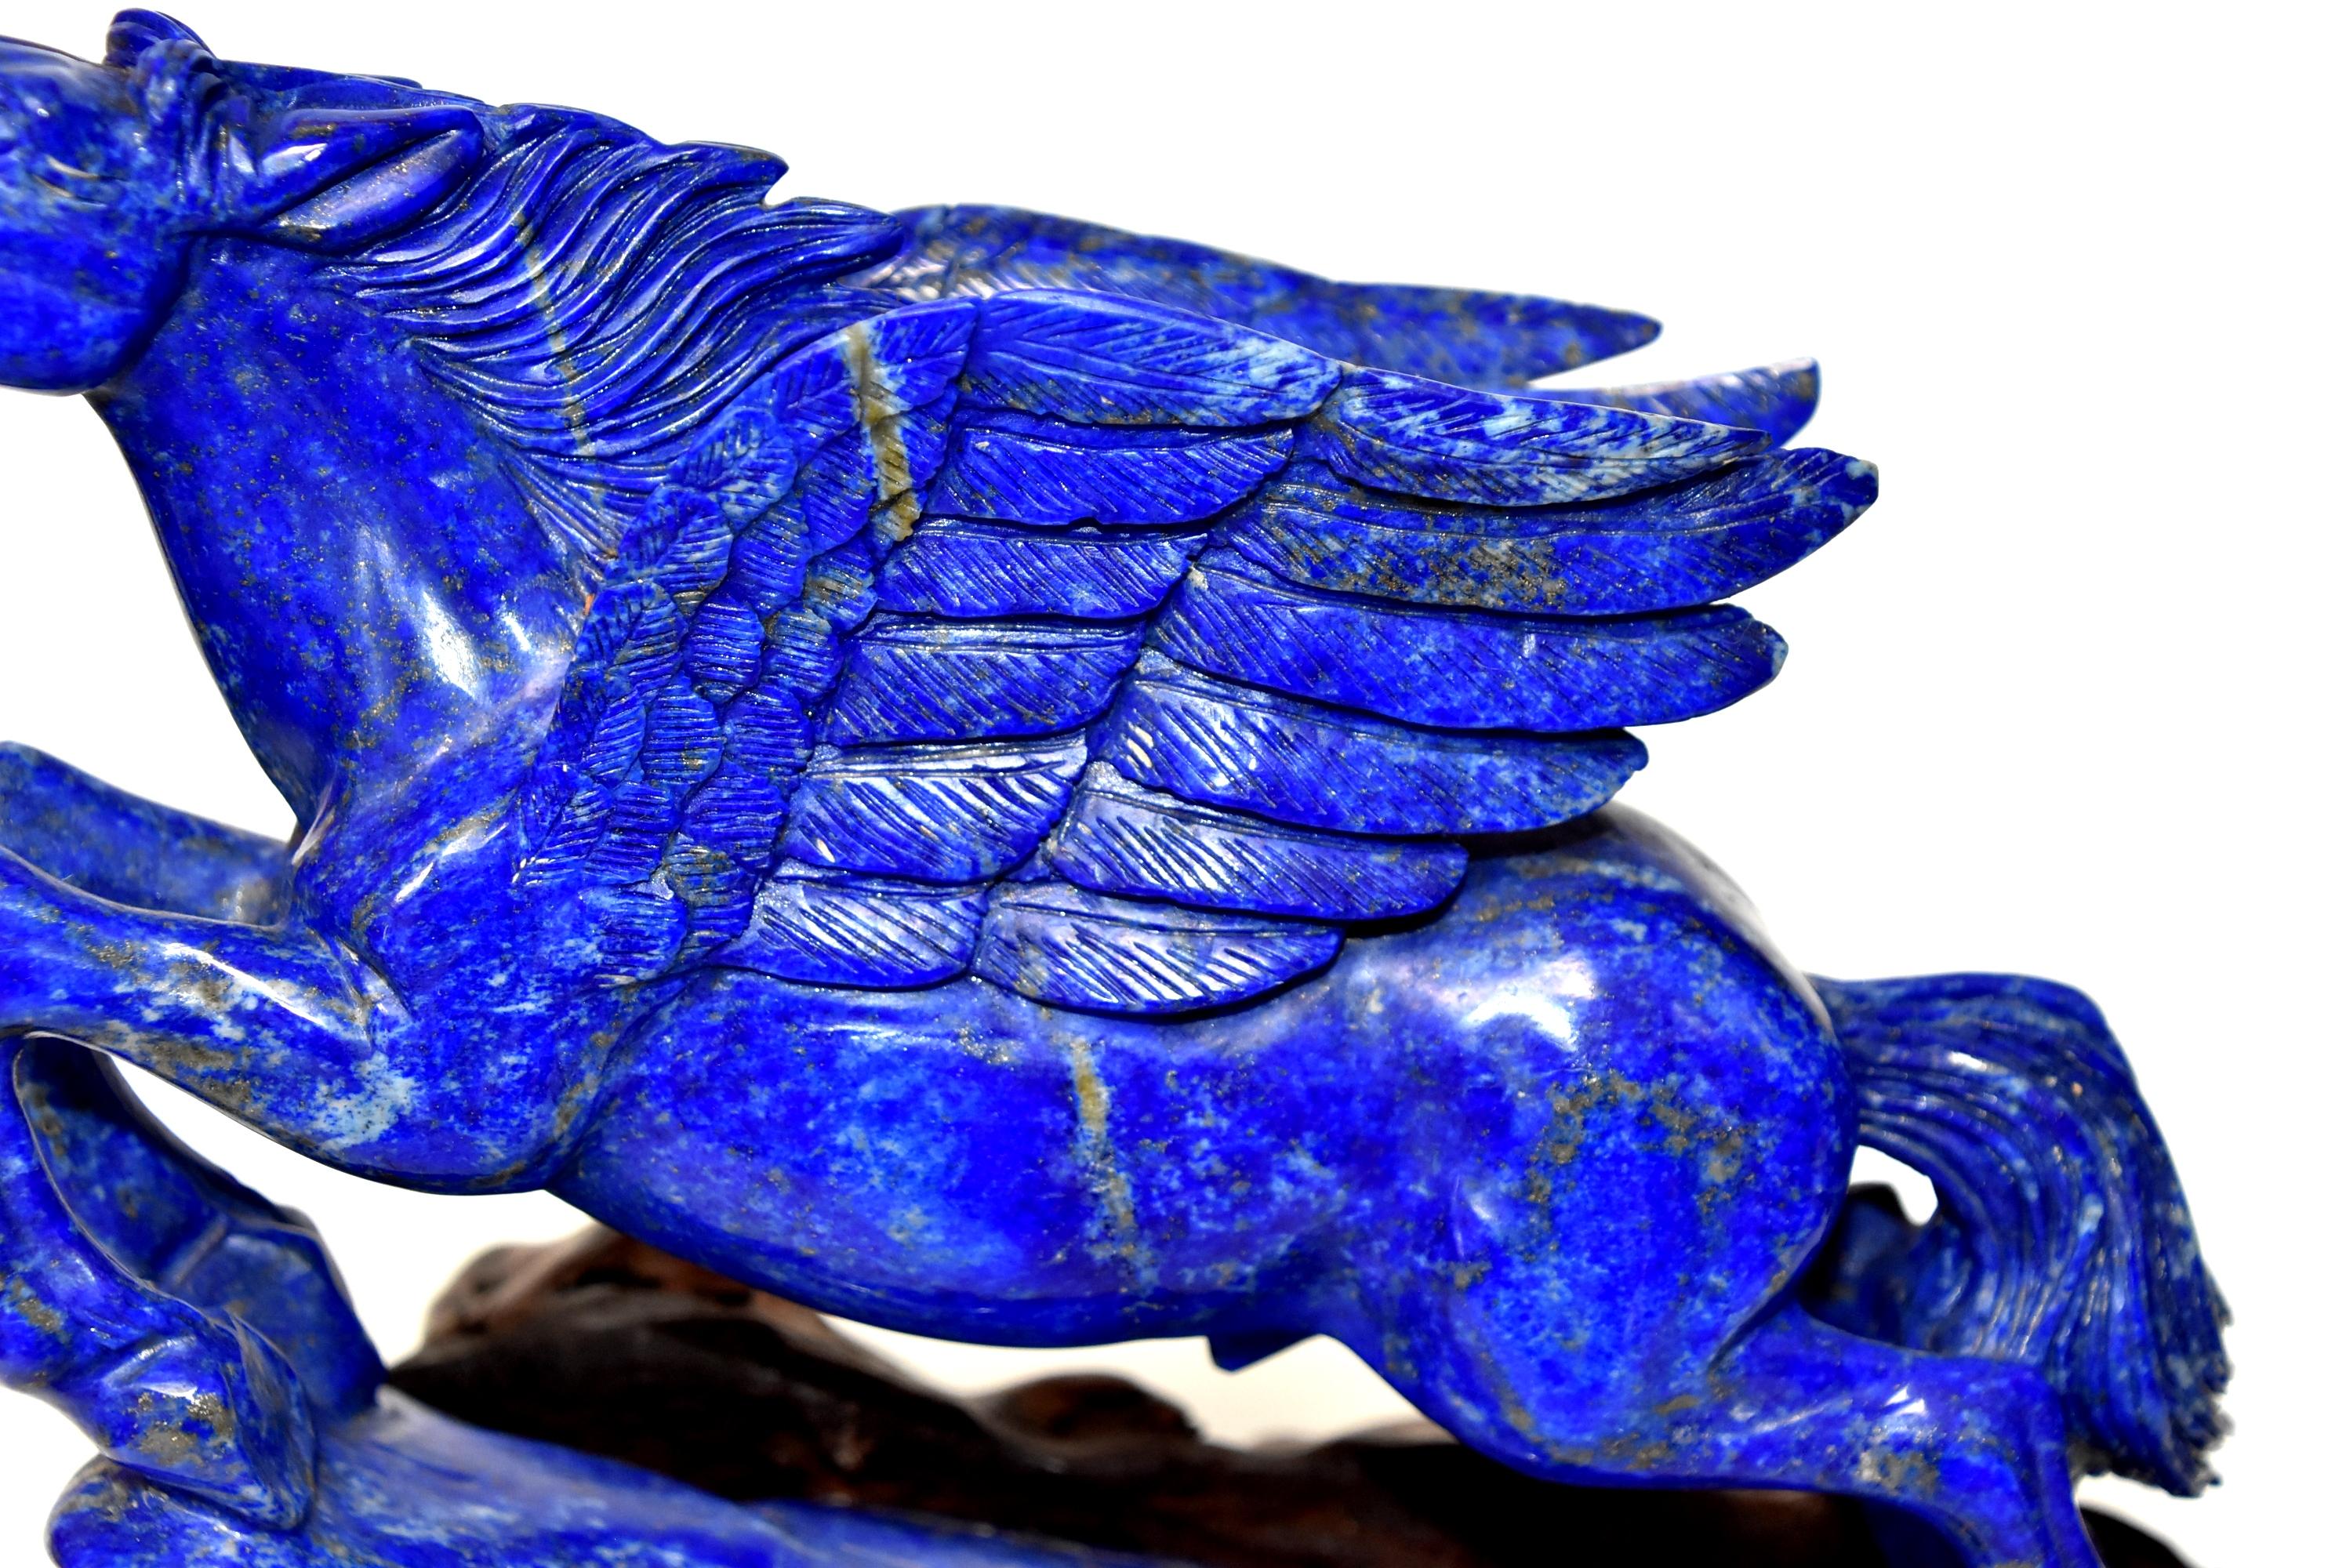 Hand-Carved Lapis Lazuli Statue, 4.5 Lb Pegasus Sculpture by Known Artist